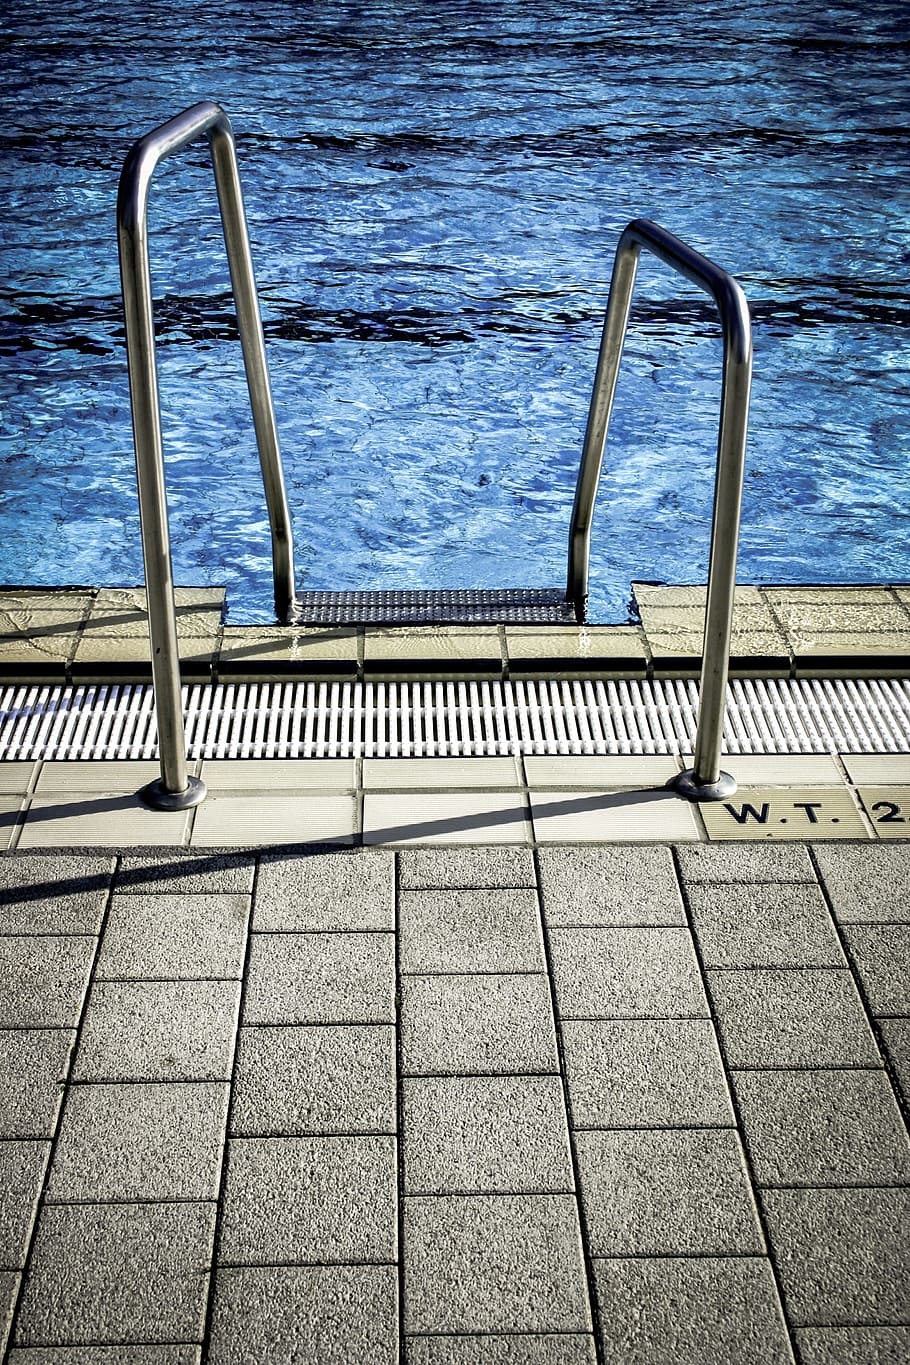 water, pattern, tiles, swimming pool, blue water, empty, outdoors, HD wallpaper